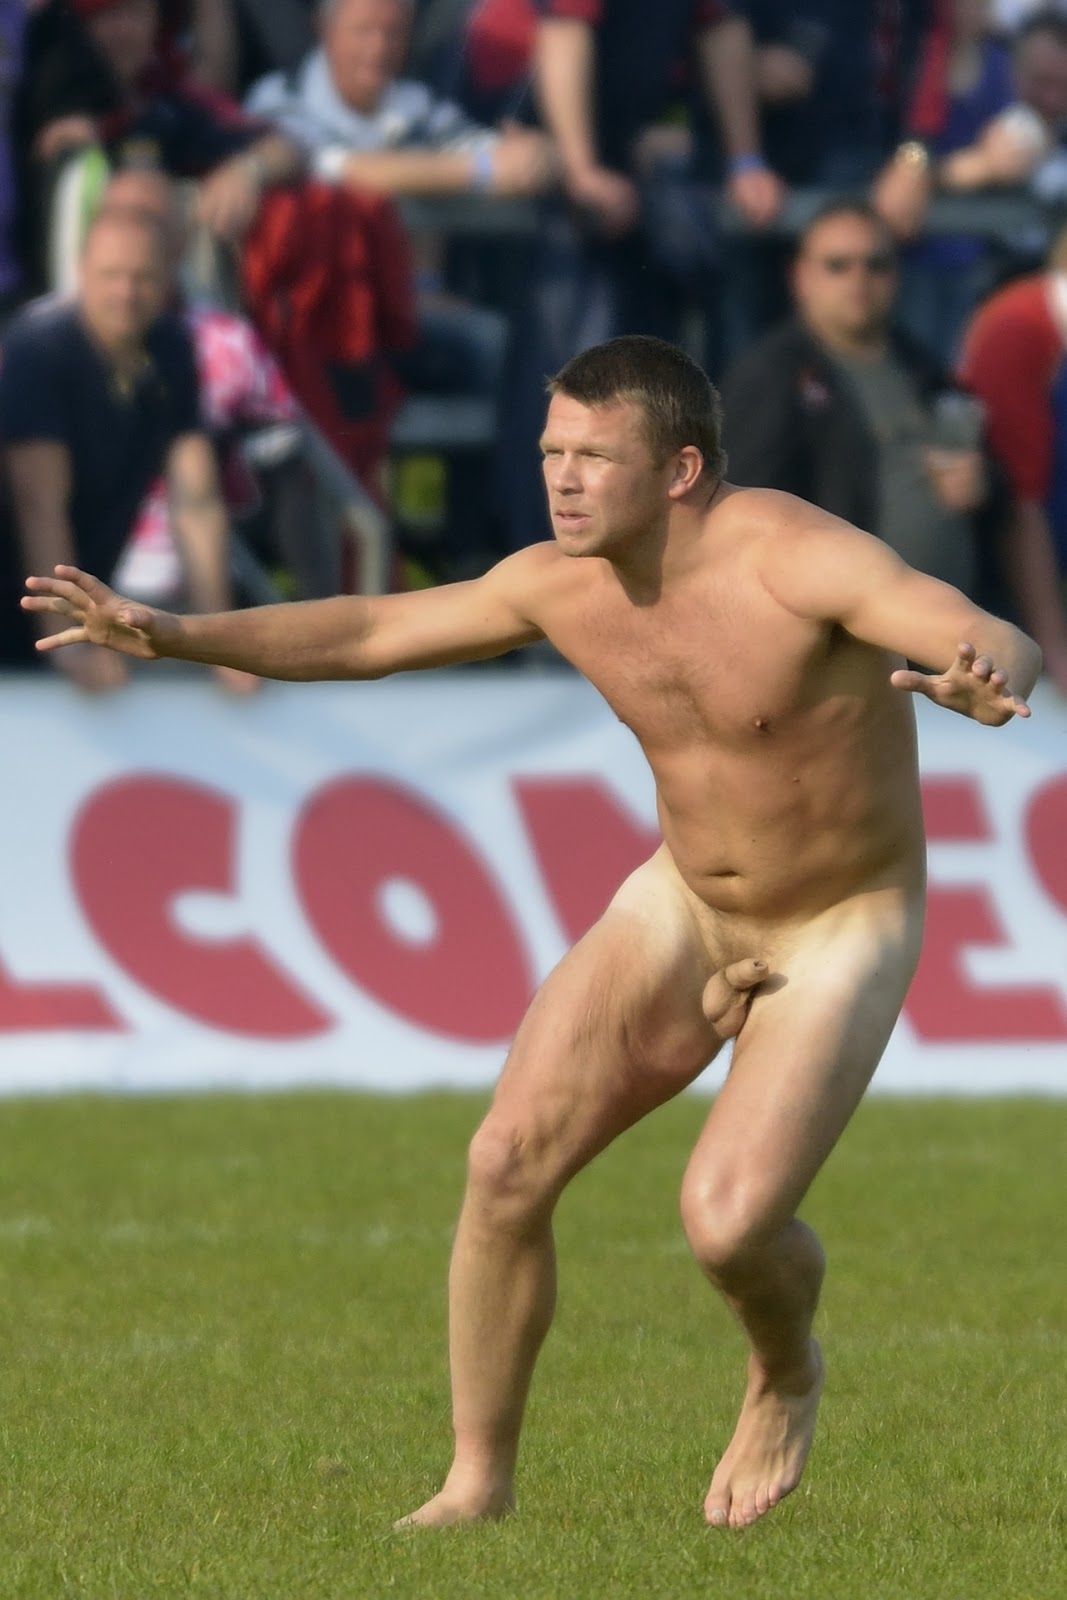 Compete Sports Men Nude Photos.